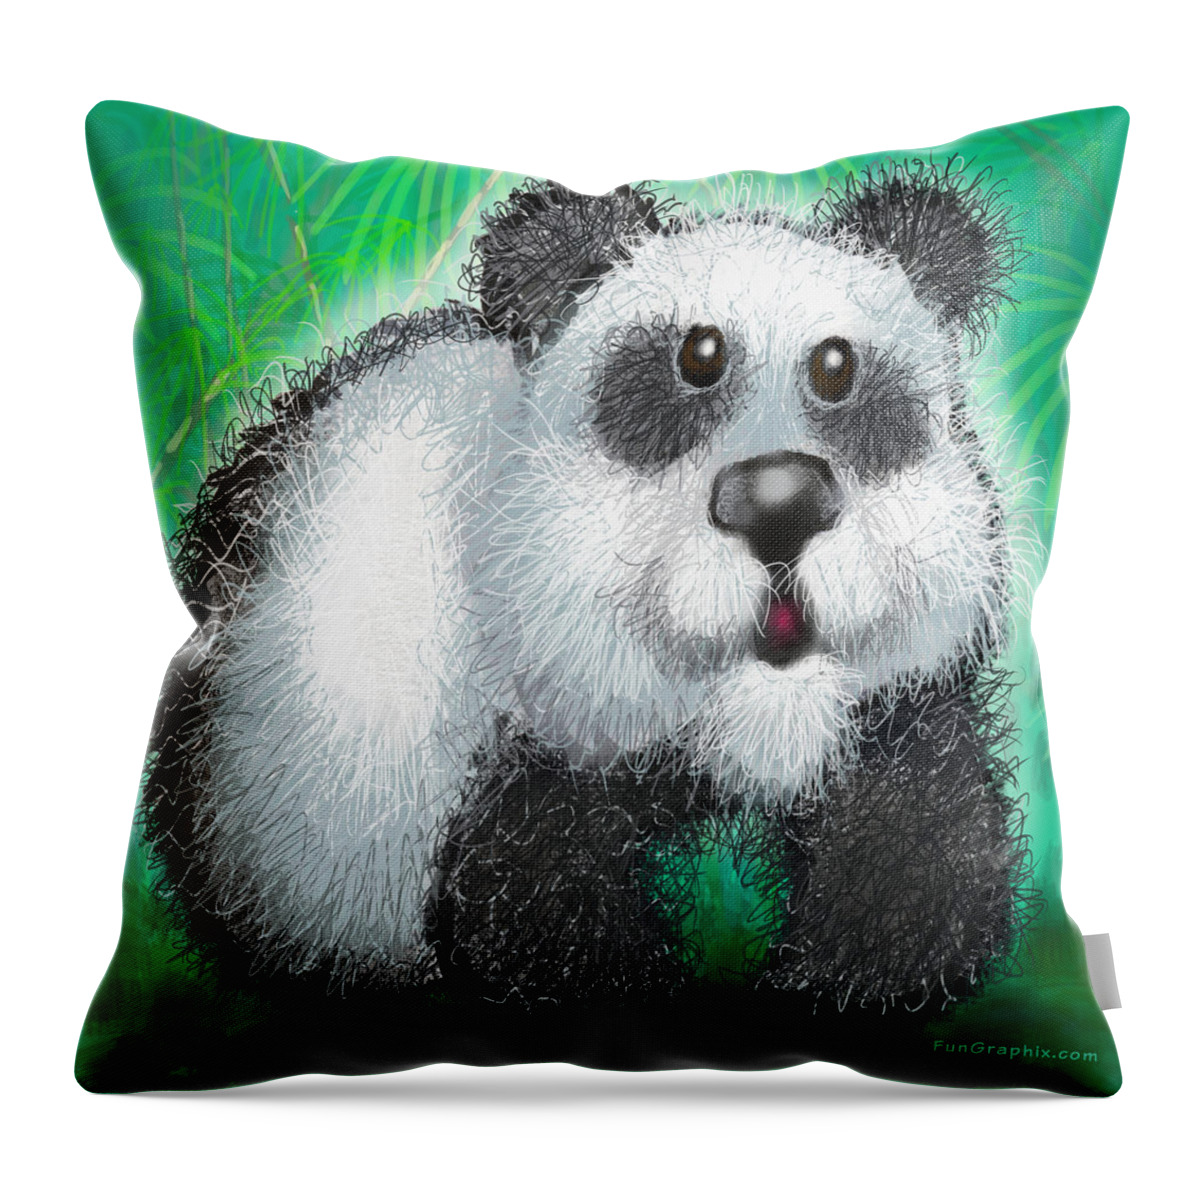 Panda Throw Pillow featuring the digital art Panda Bear by Kevin Middleton